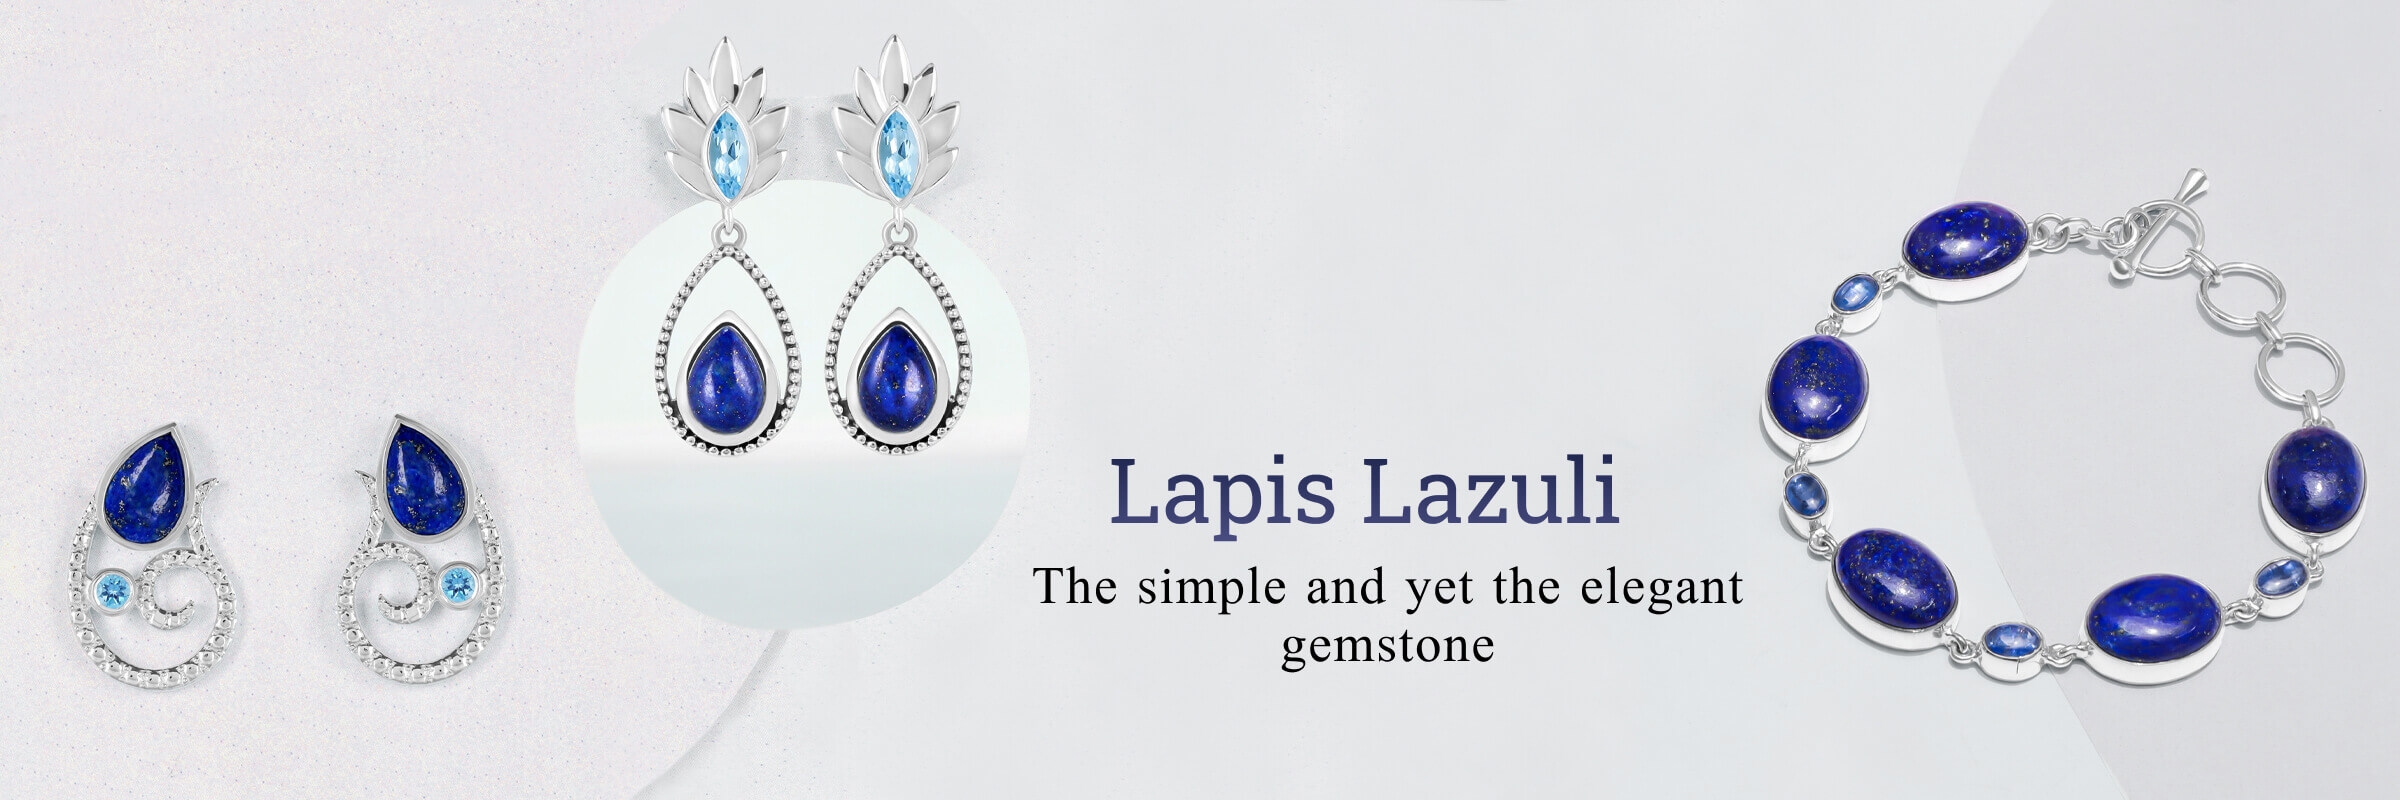 Lapis Lazuli - The simple and yet the elegant gemstone